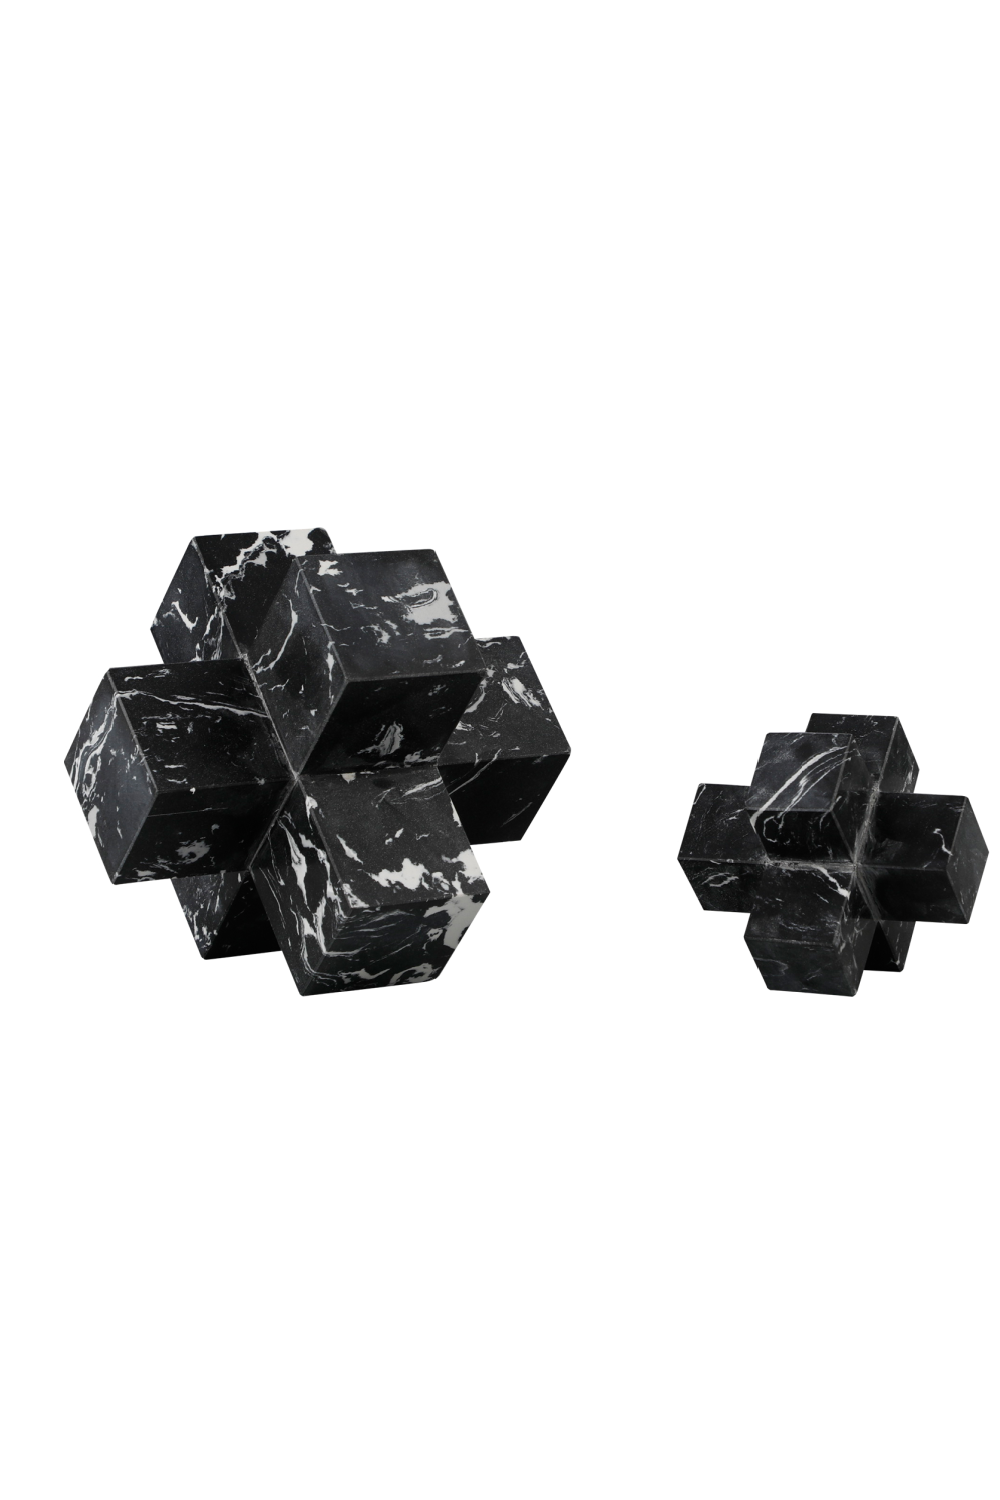 Small Geometric Black Marble Sculpture | Liang & Eimil | Oroa.com